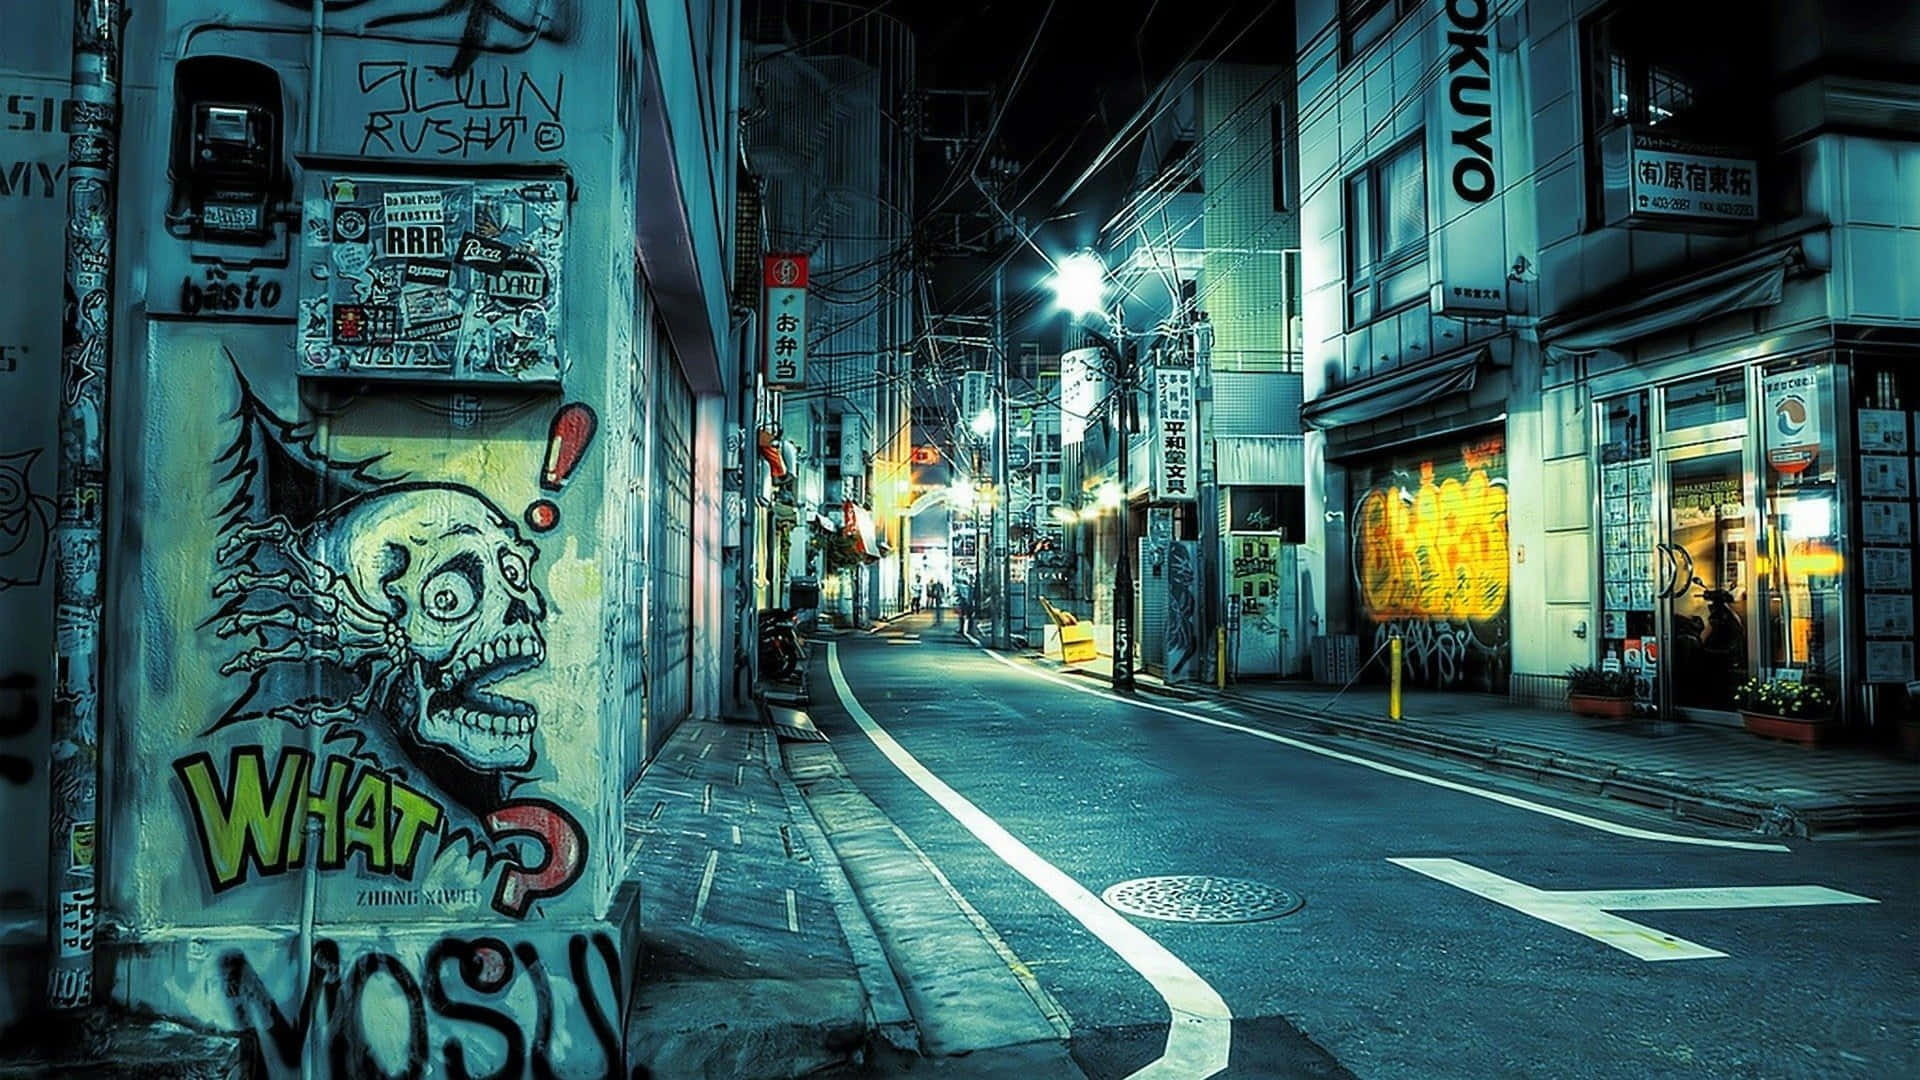 Local Street In Japan At Night Wallpaper